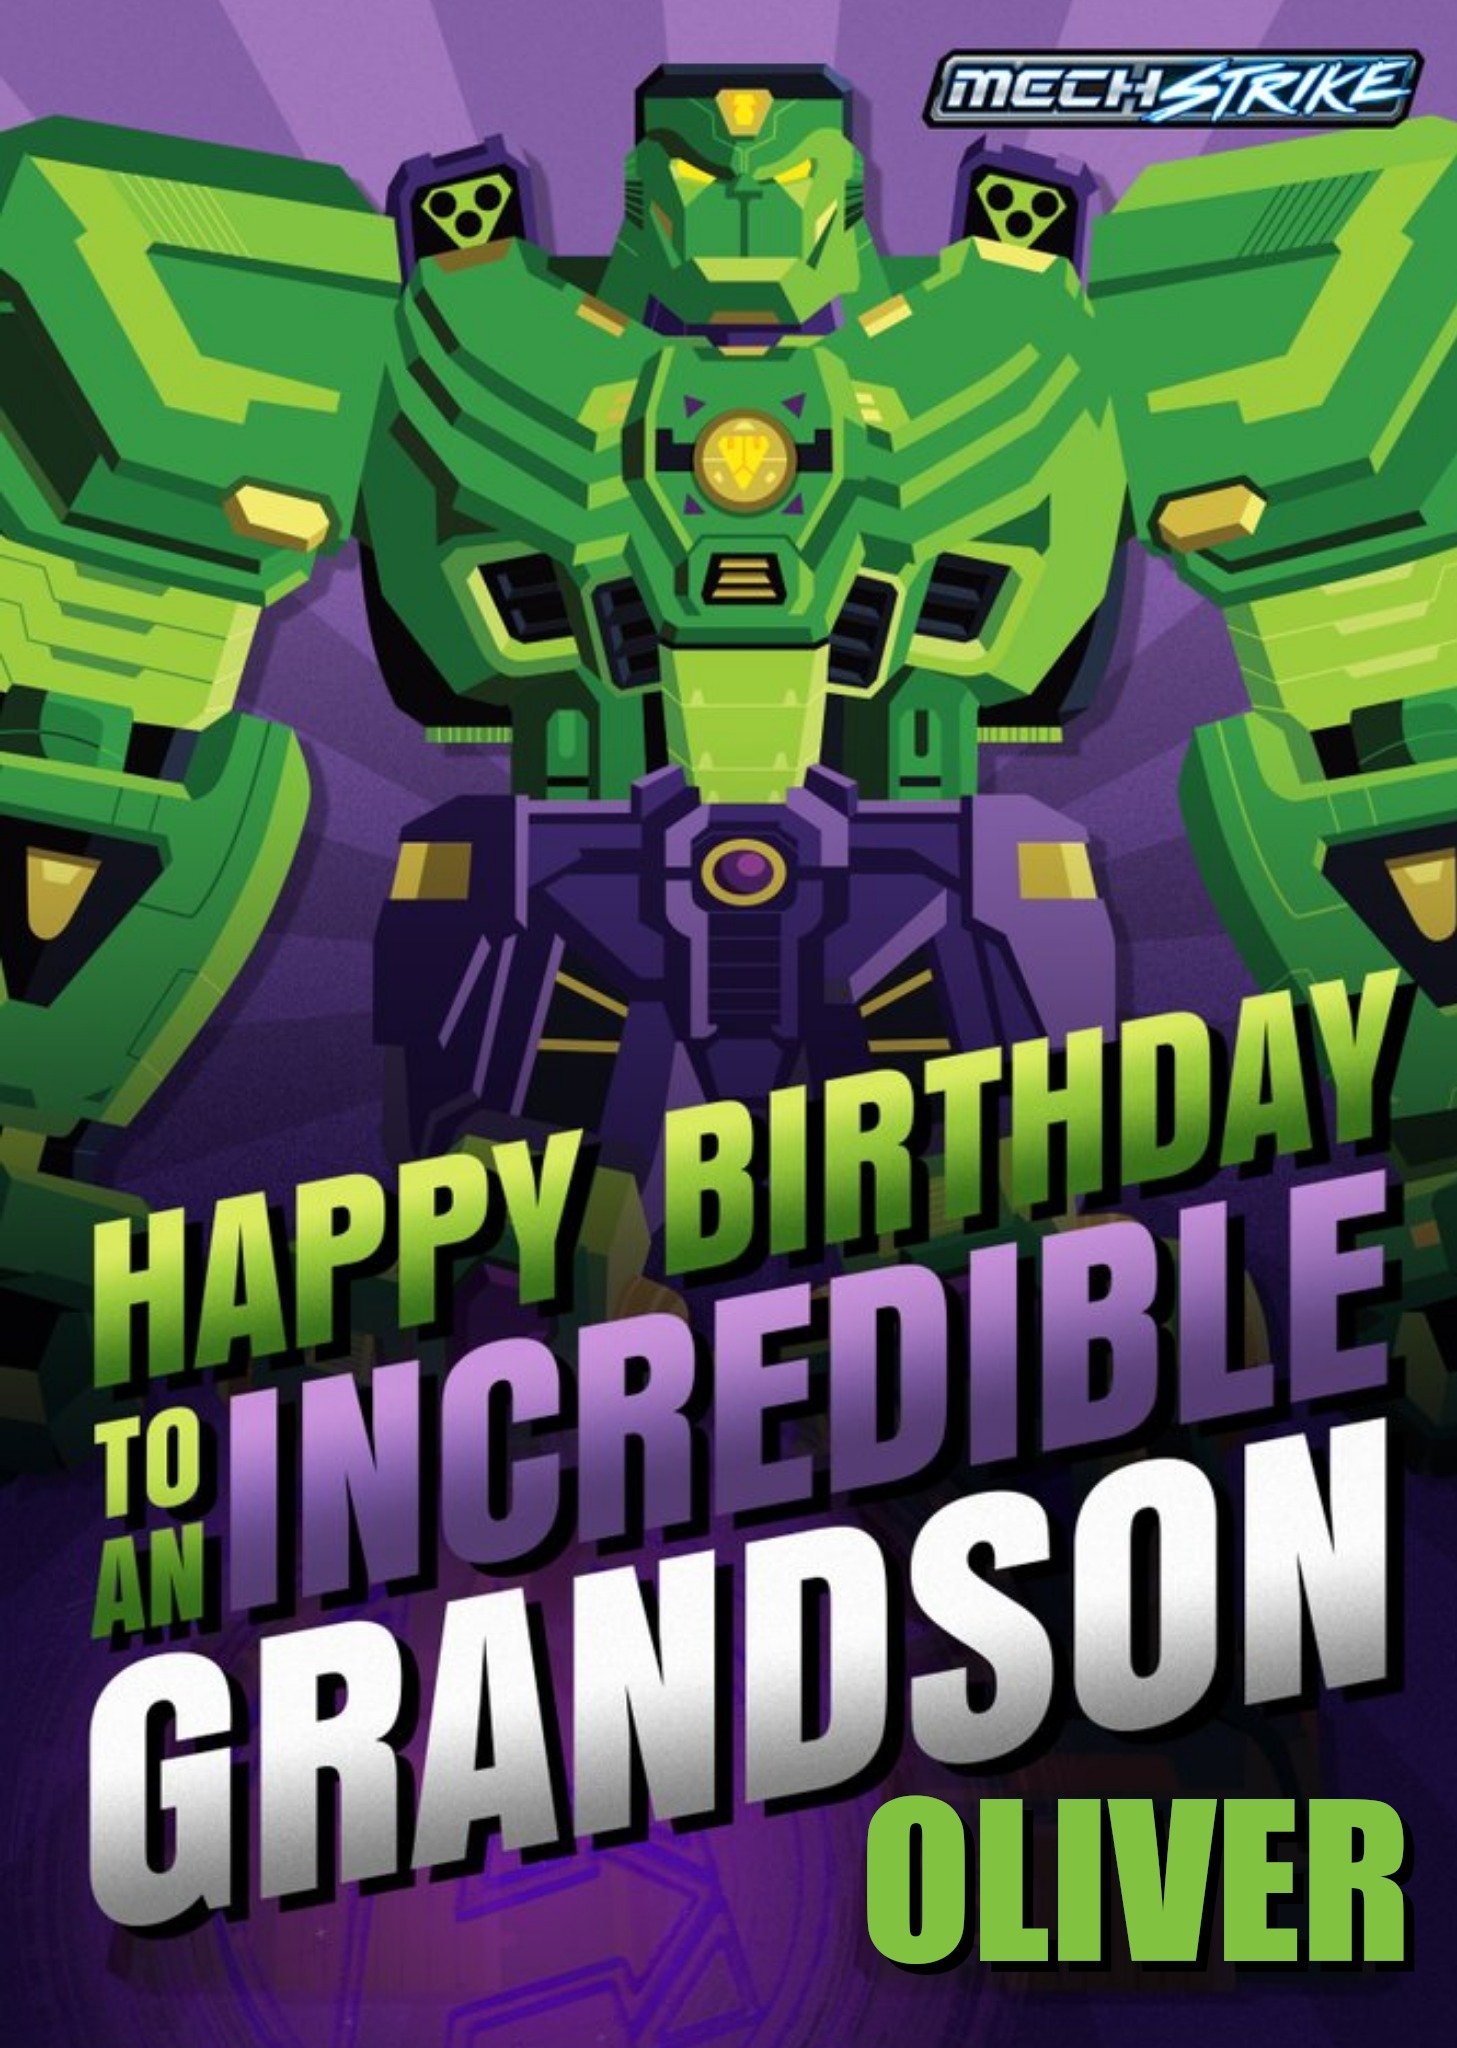 Disney Avengers Mech Strike To An Incredible Grandson Birthday Card Ecard